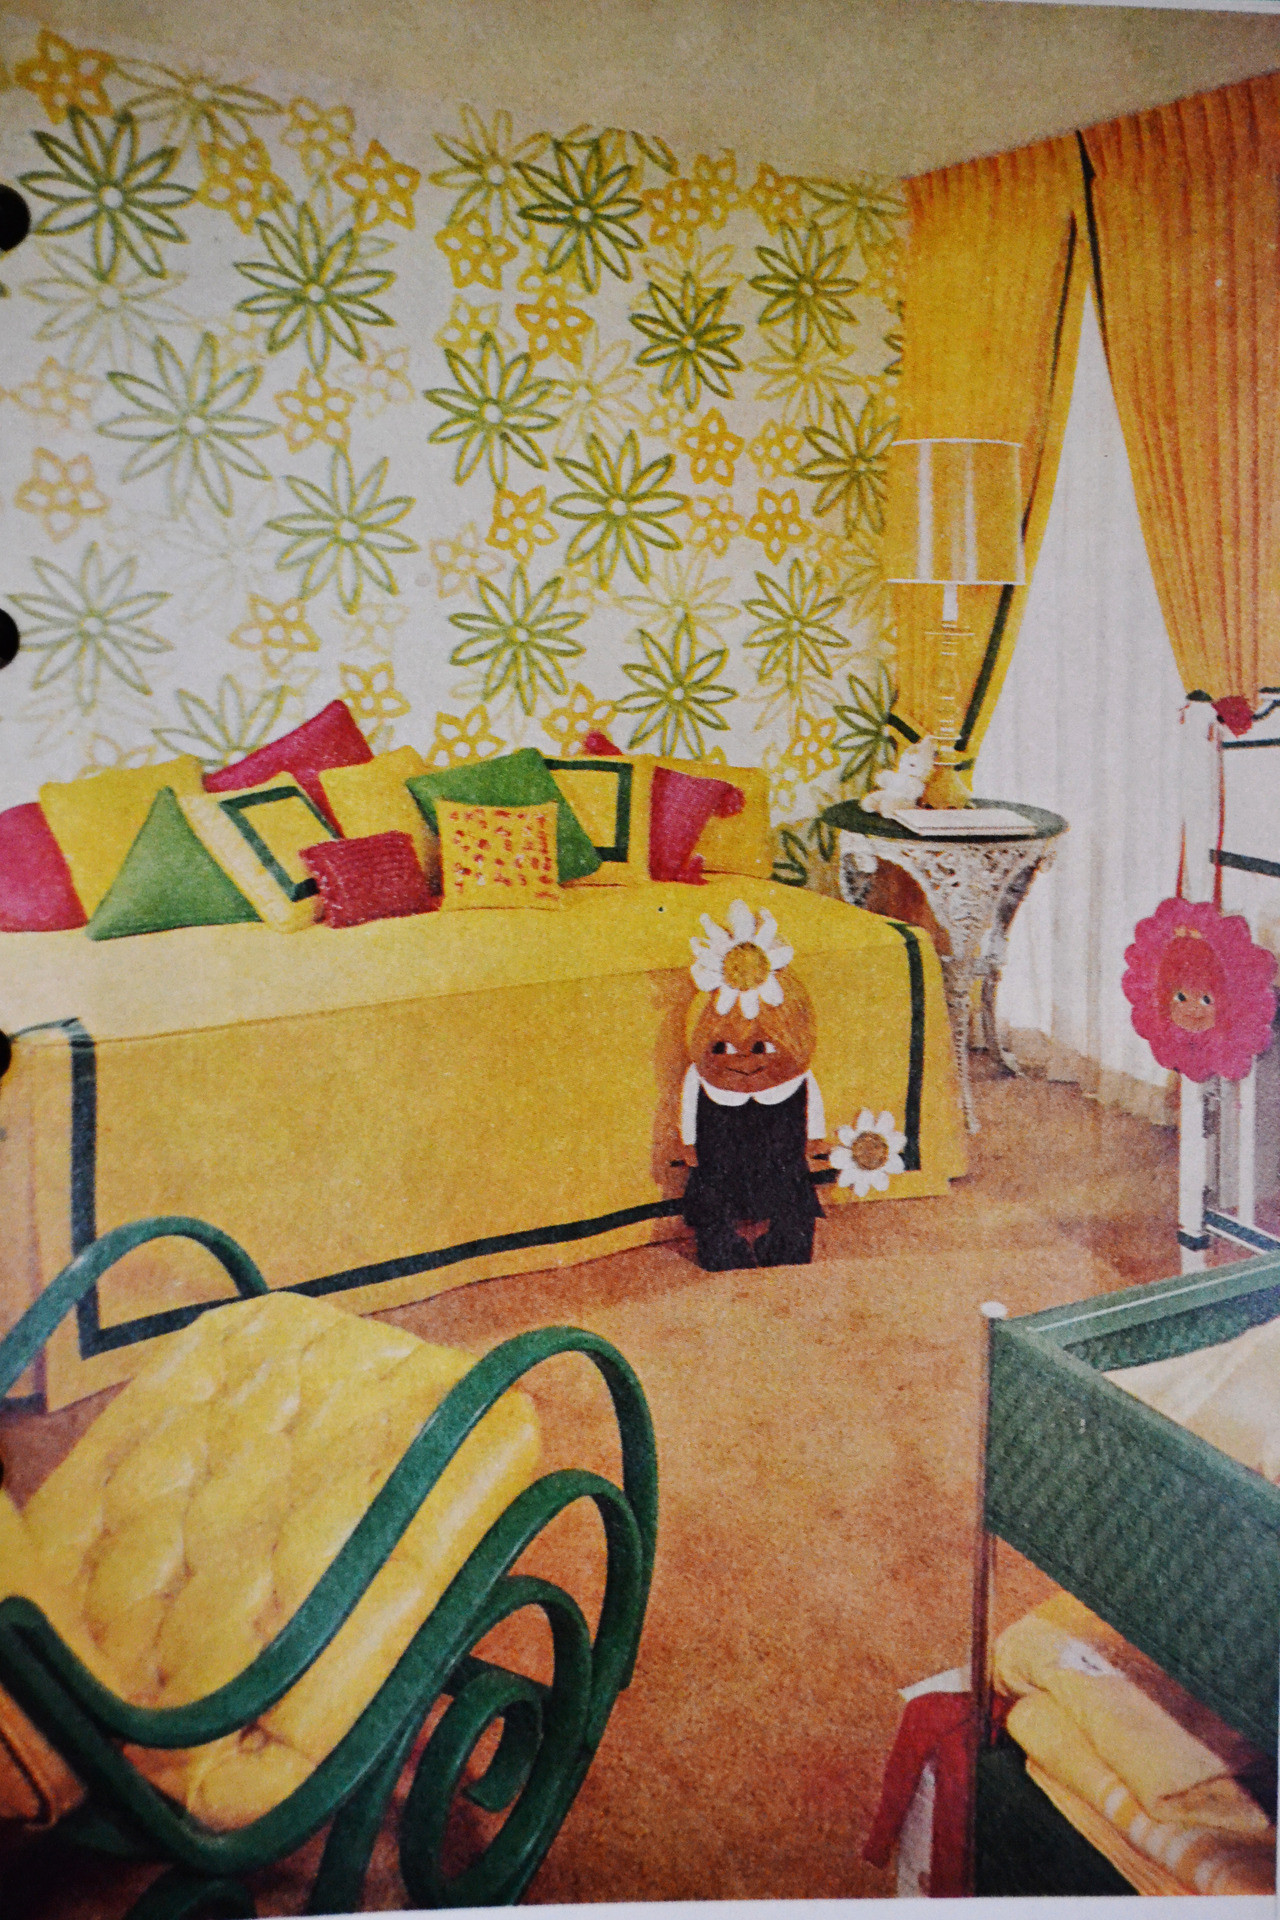 1280x1920 Late 60's little girl/baby room! Love that wallpaper!